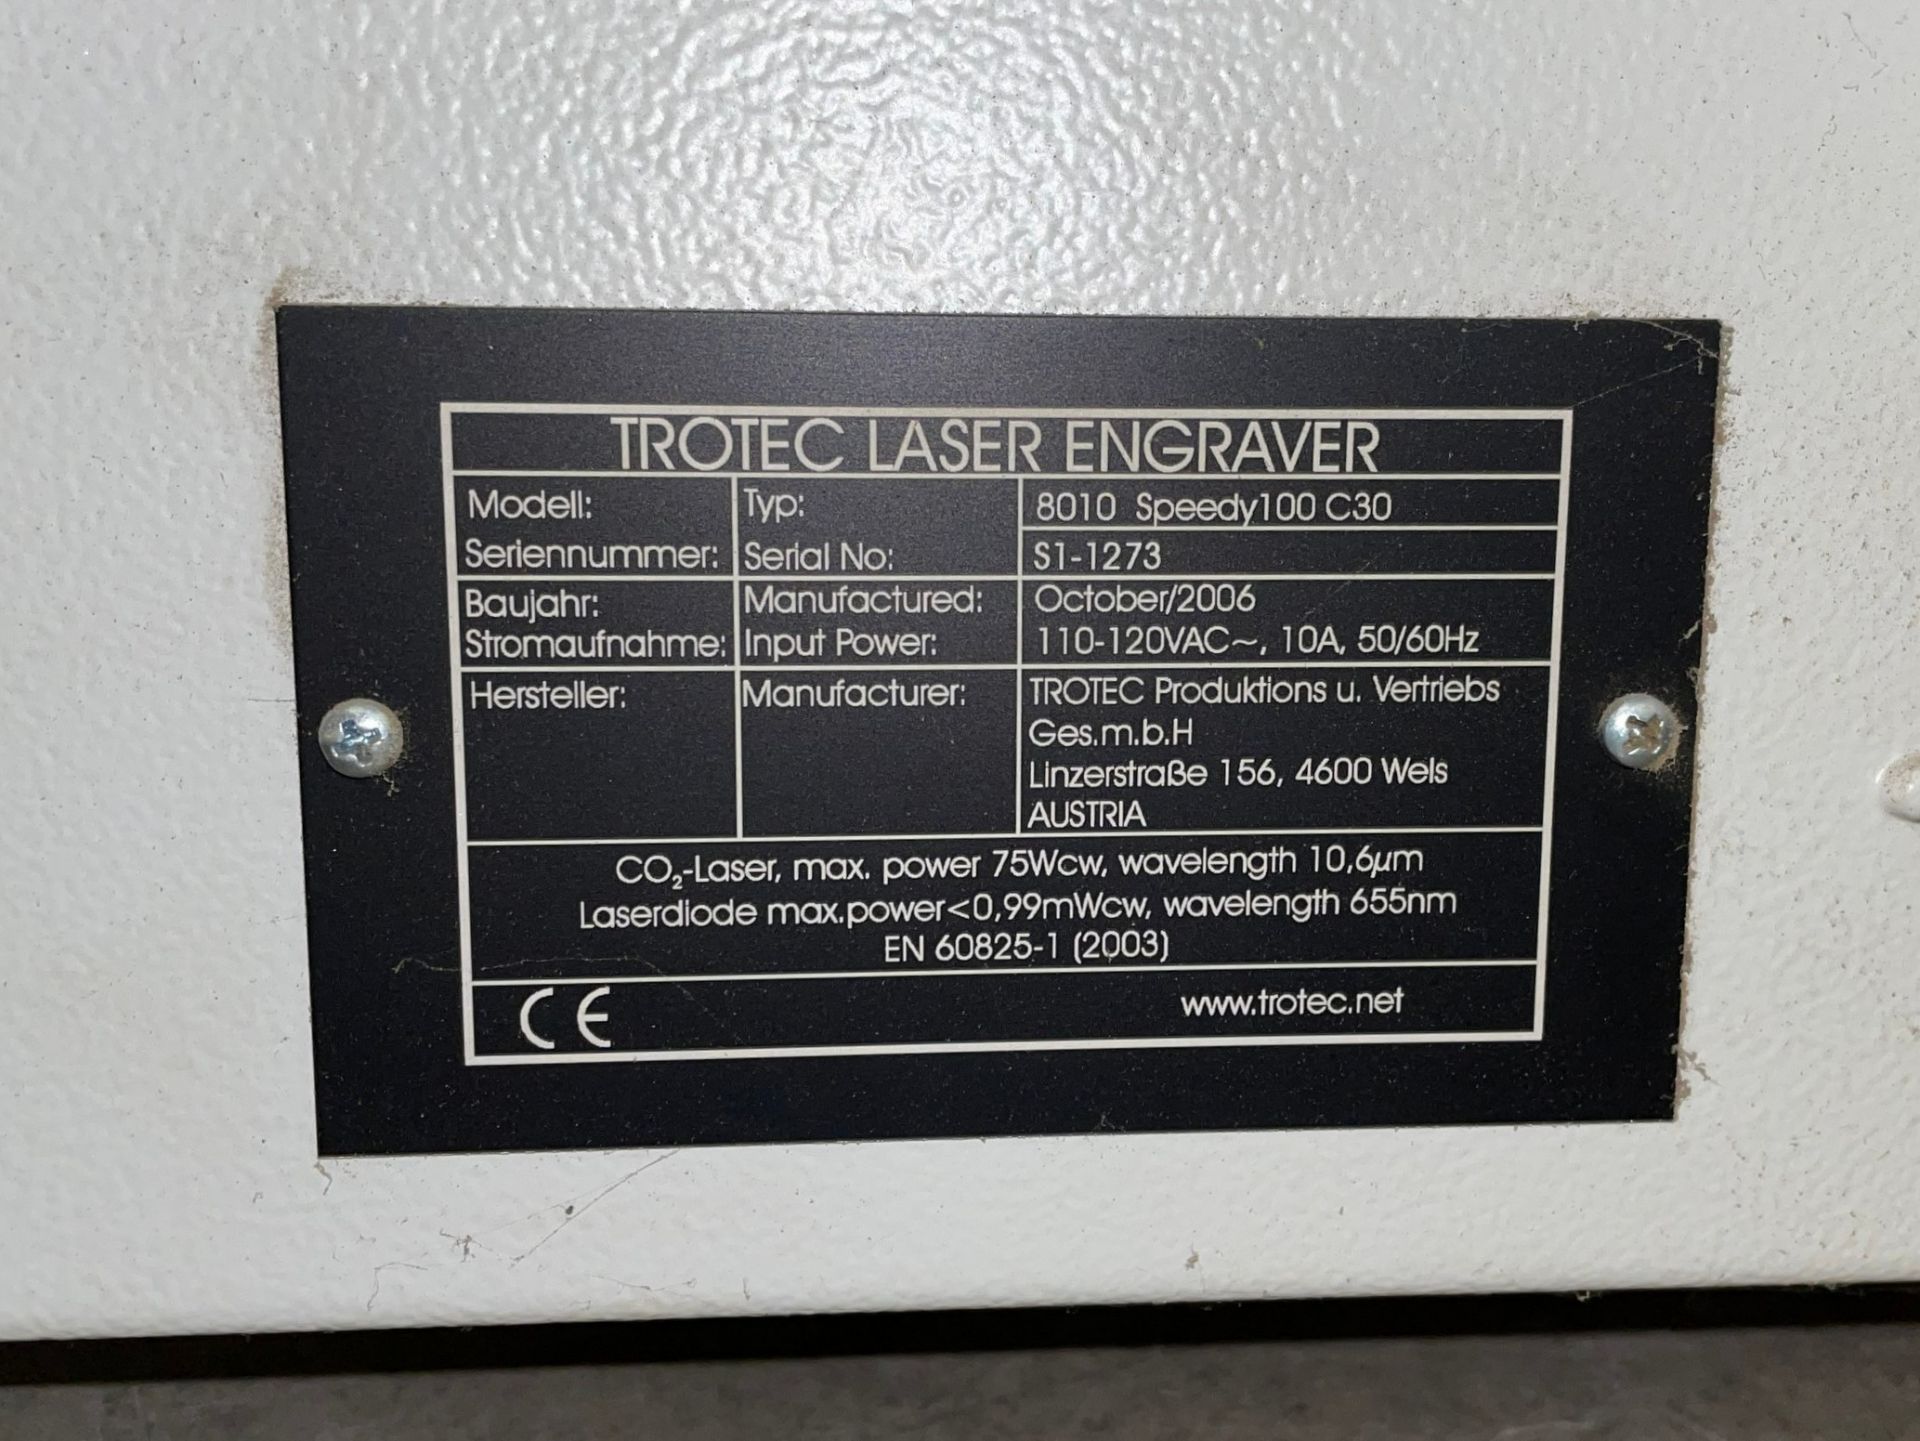 2006 - Trotec 8010 Speedy100 C30 Laser Engraver - Image 4 of 4